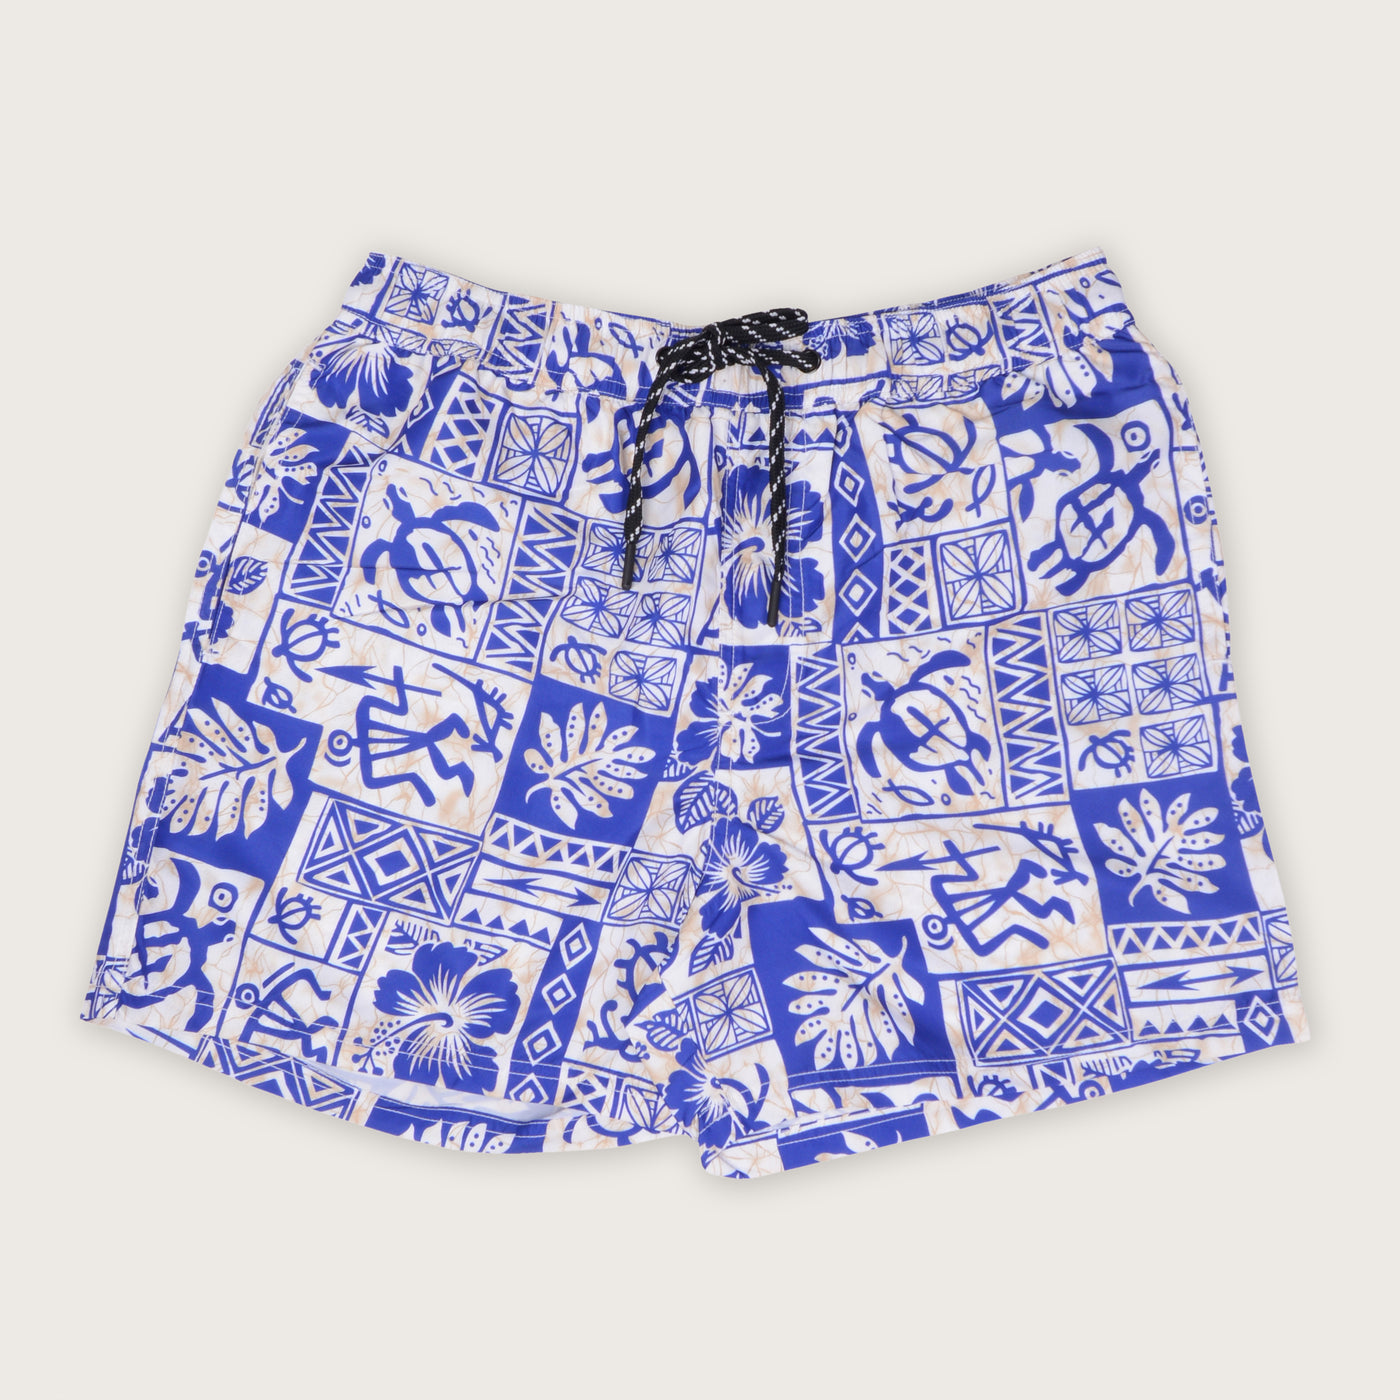 Buy now breain ocean swim shorts